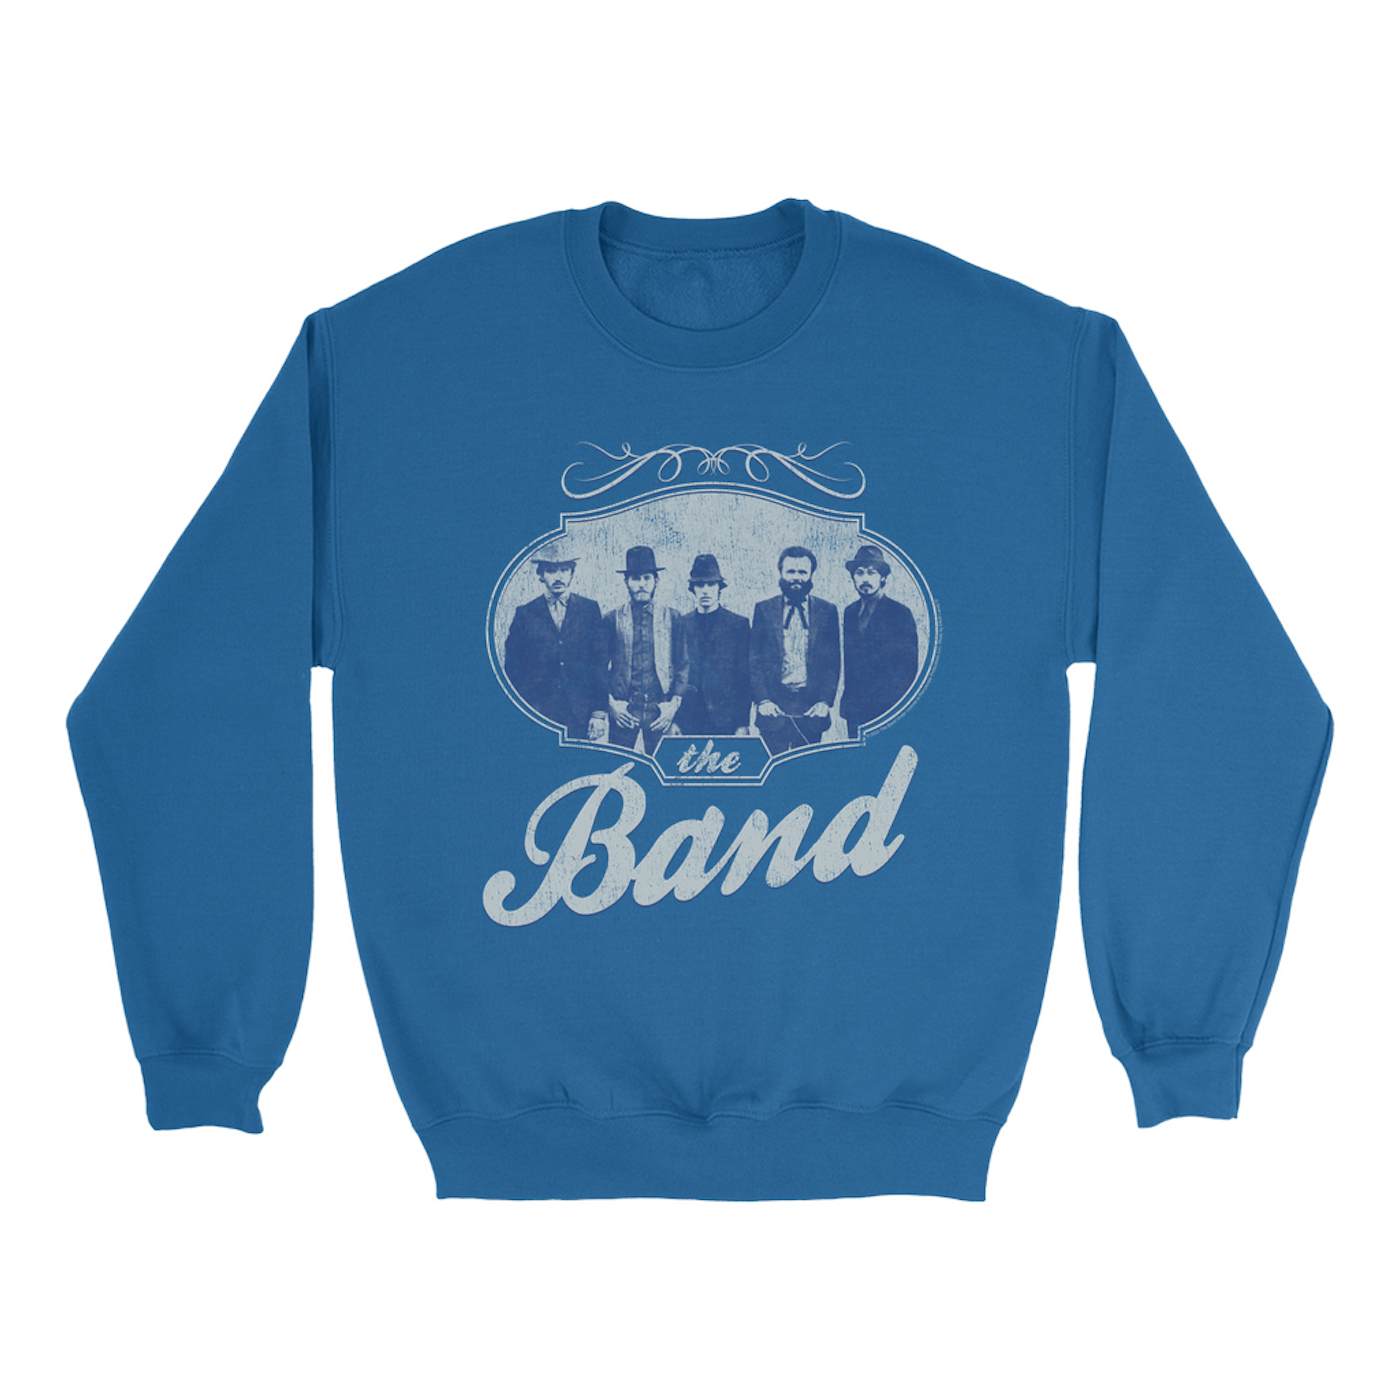 The Band Sweatshirt | Filigree Framed Band Photo Design Distressed The Band Sweatshirt